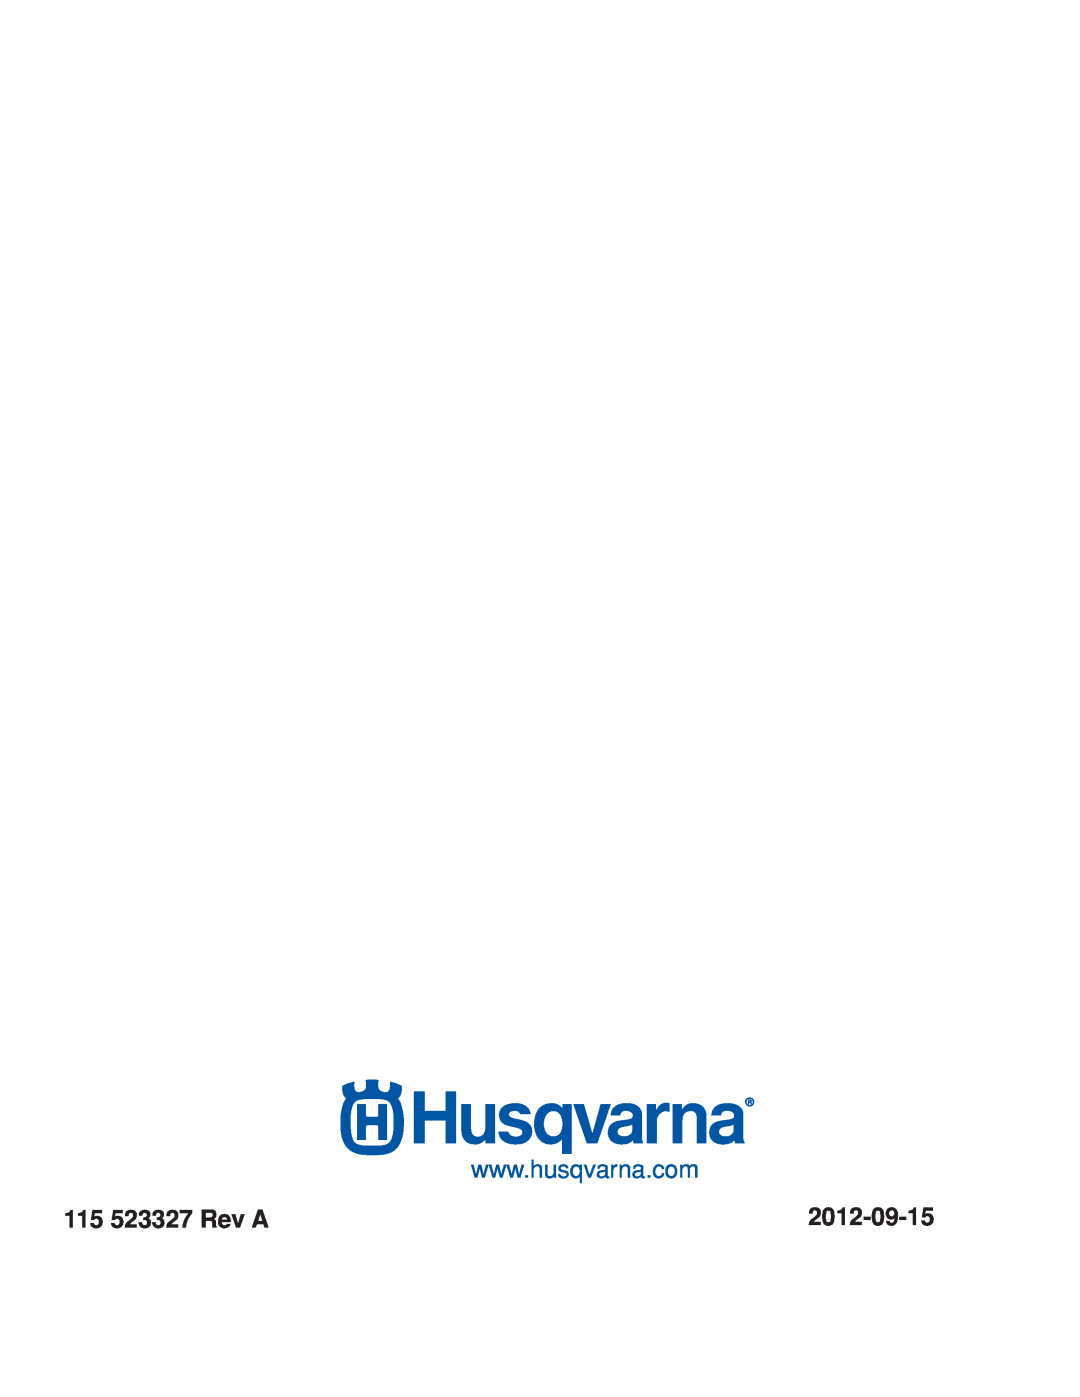 Husqvarna MZ6128/966613103 warranty 115 523327 Rev A, 2012-09-15 